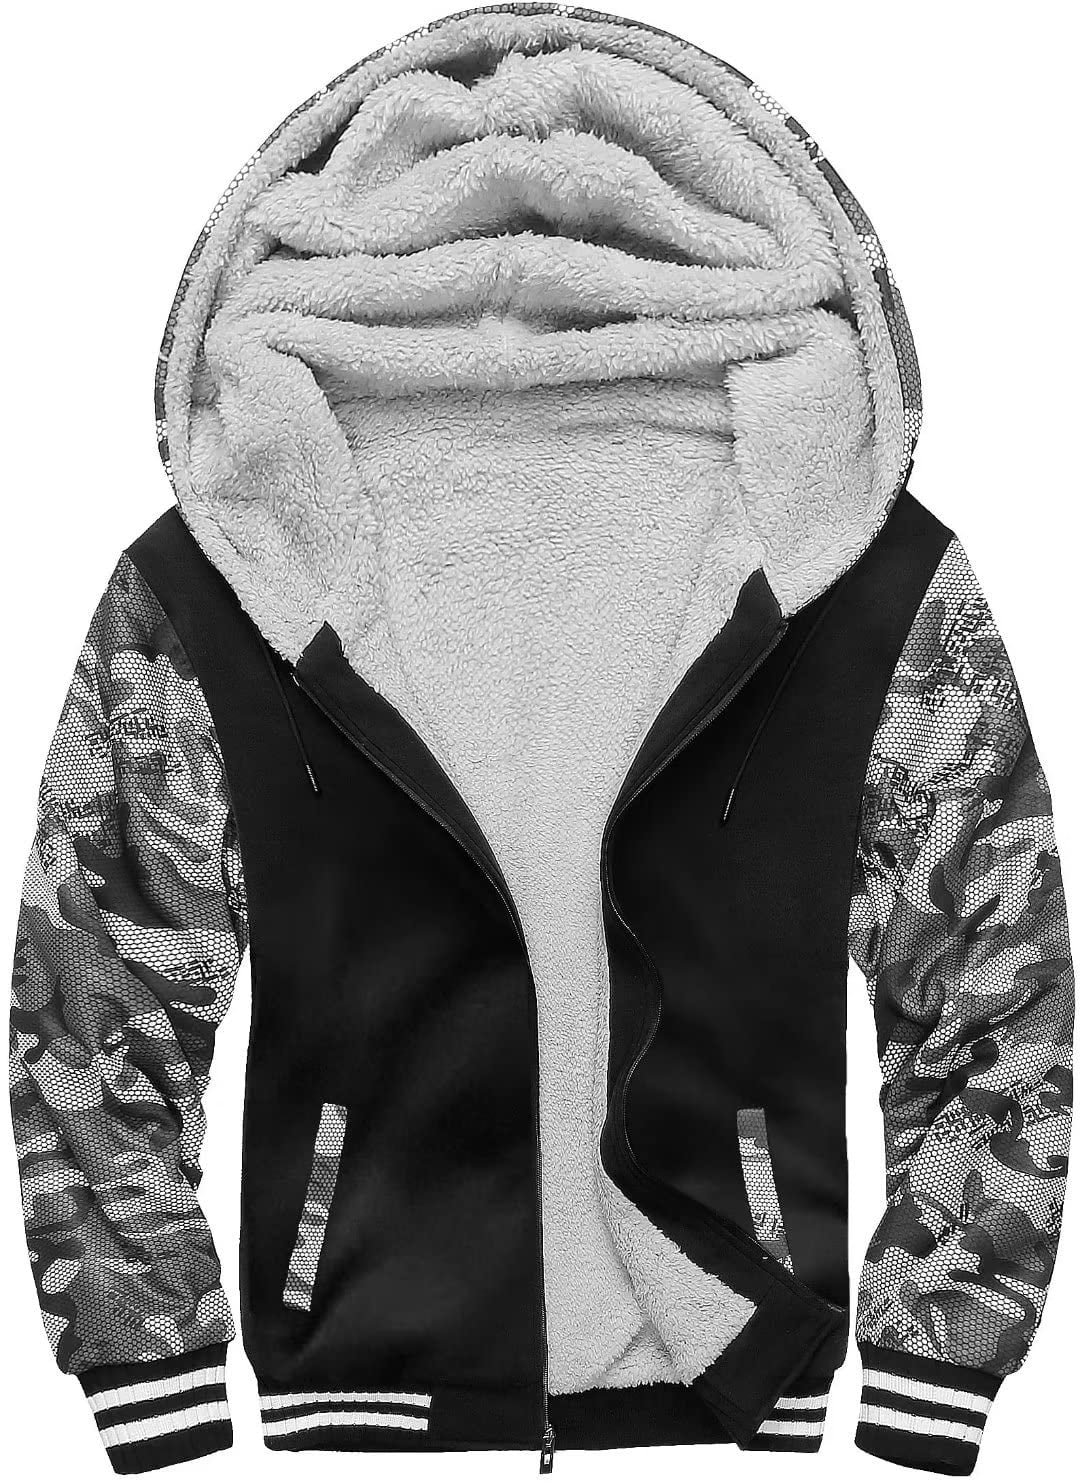 SWISSWELL Hoodies for Men Fleece Sherpa Lined Jacket Zip Up Sweatshirts ...